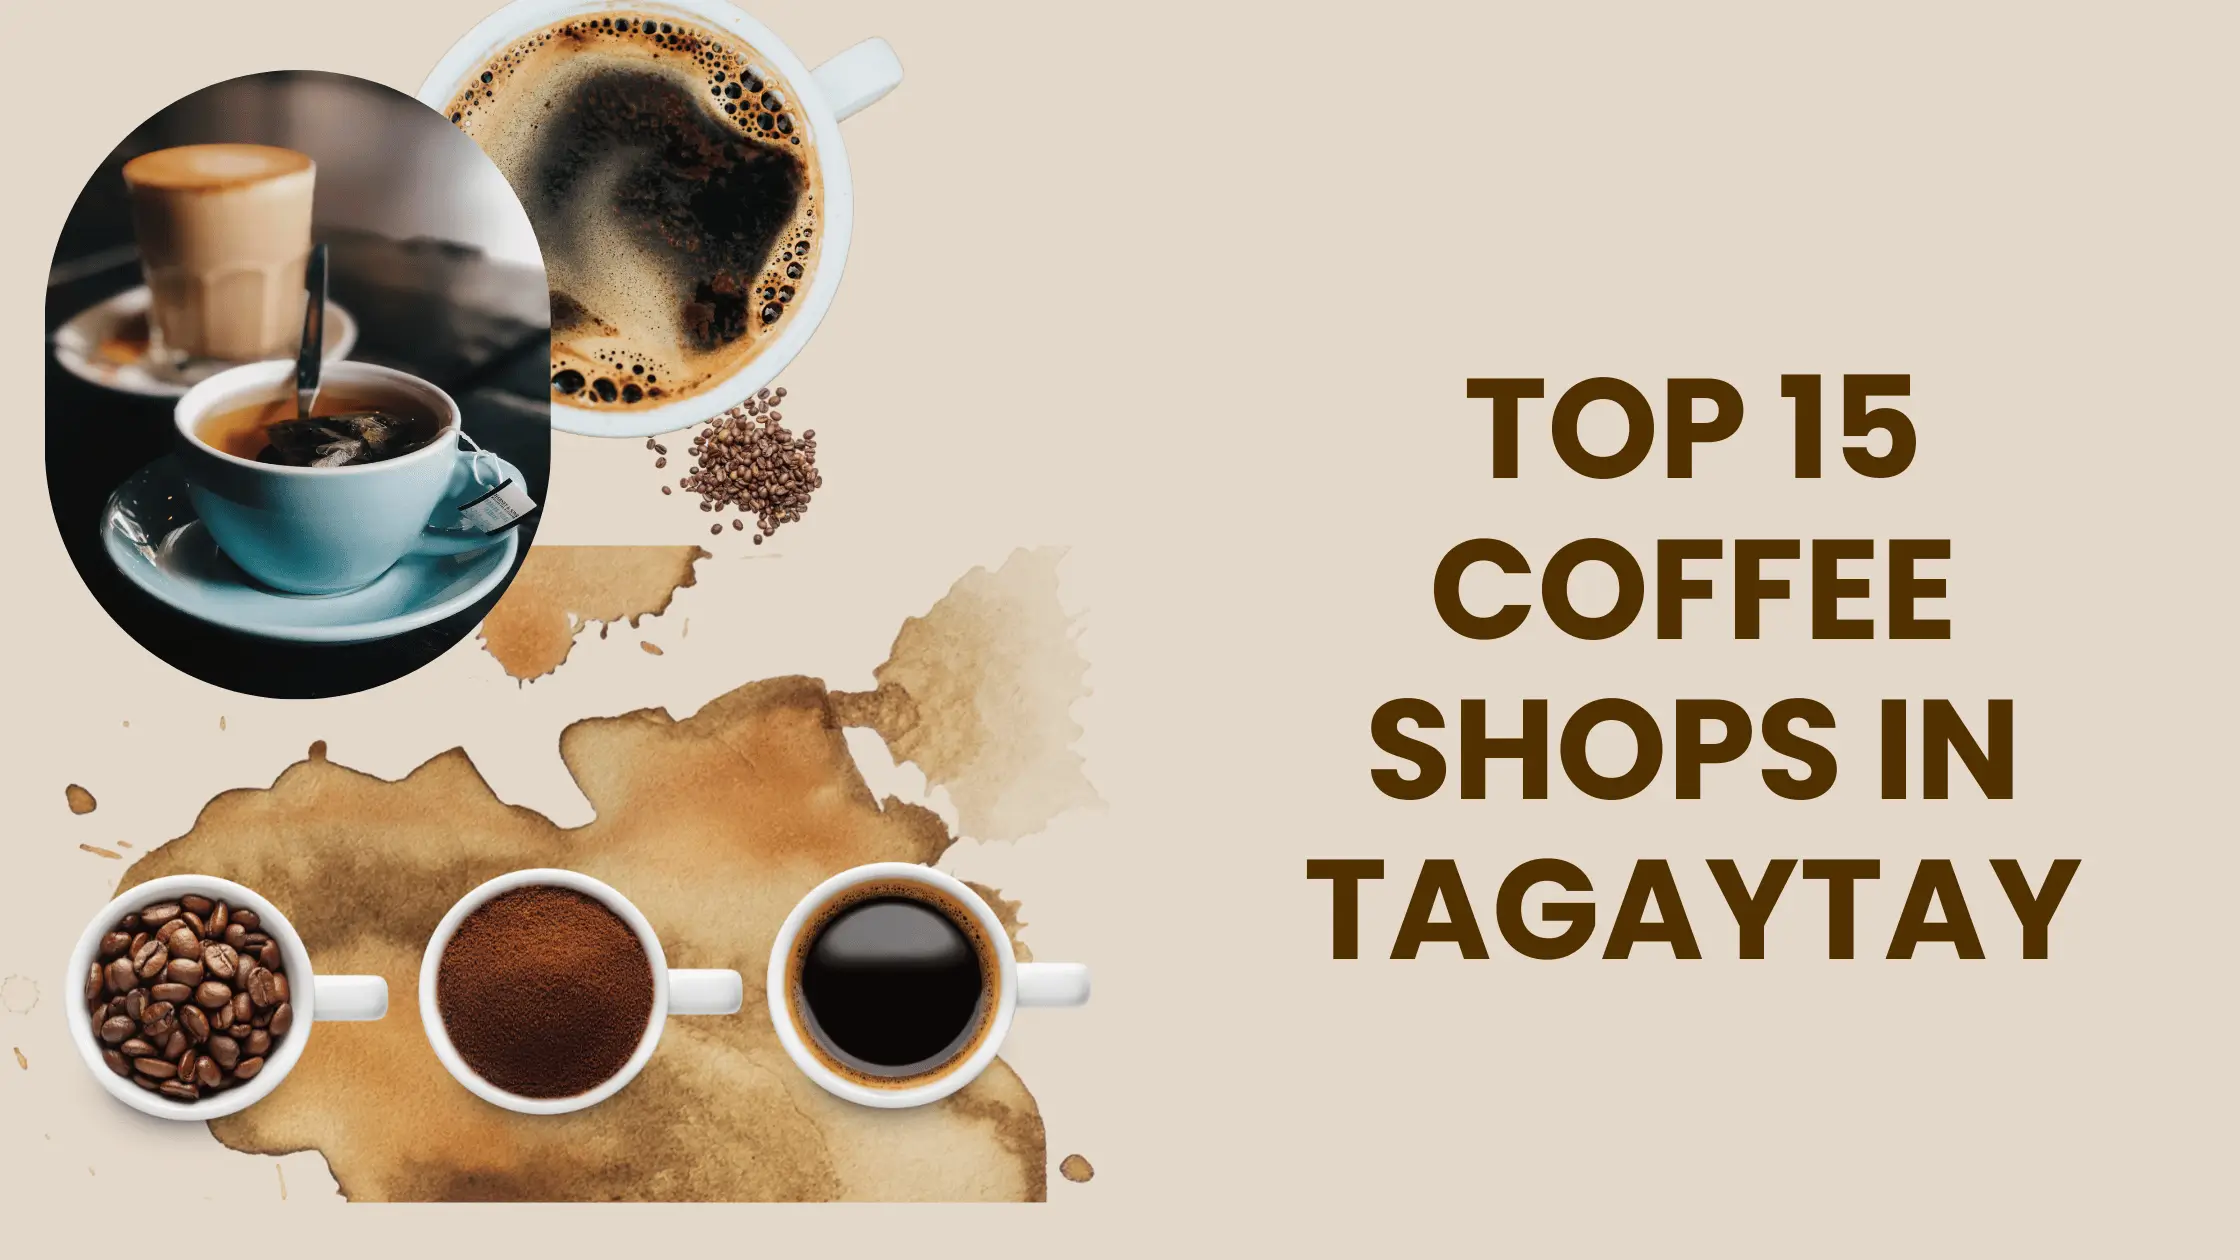 Top 15 Coffee Shops in Tagaytay